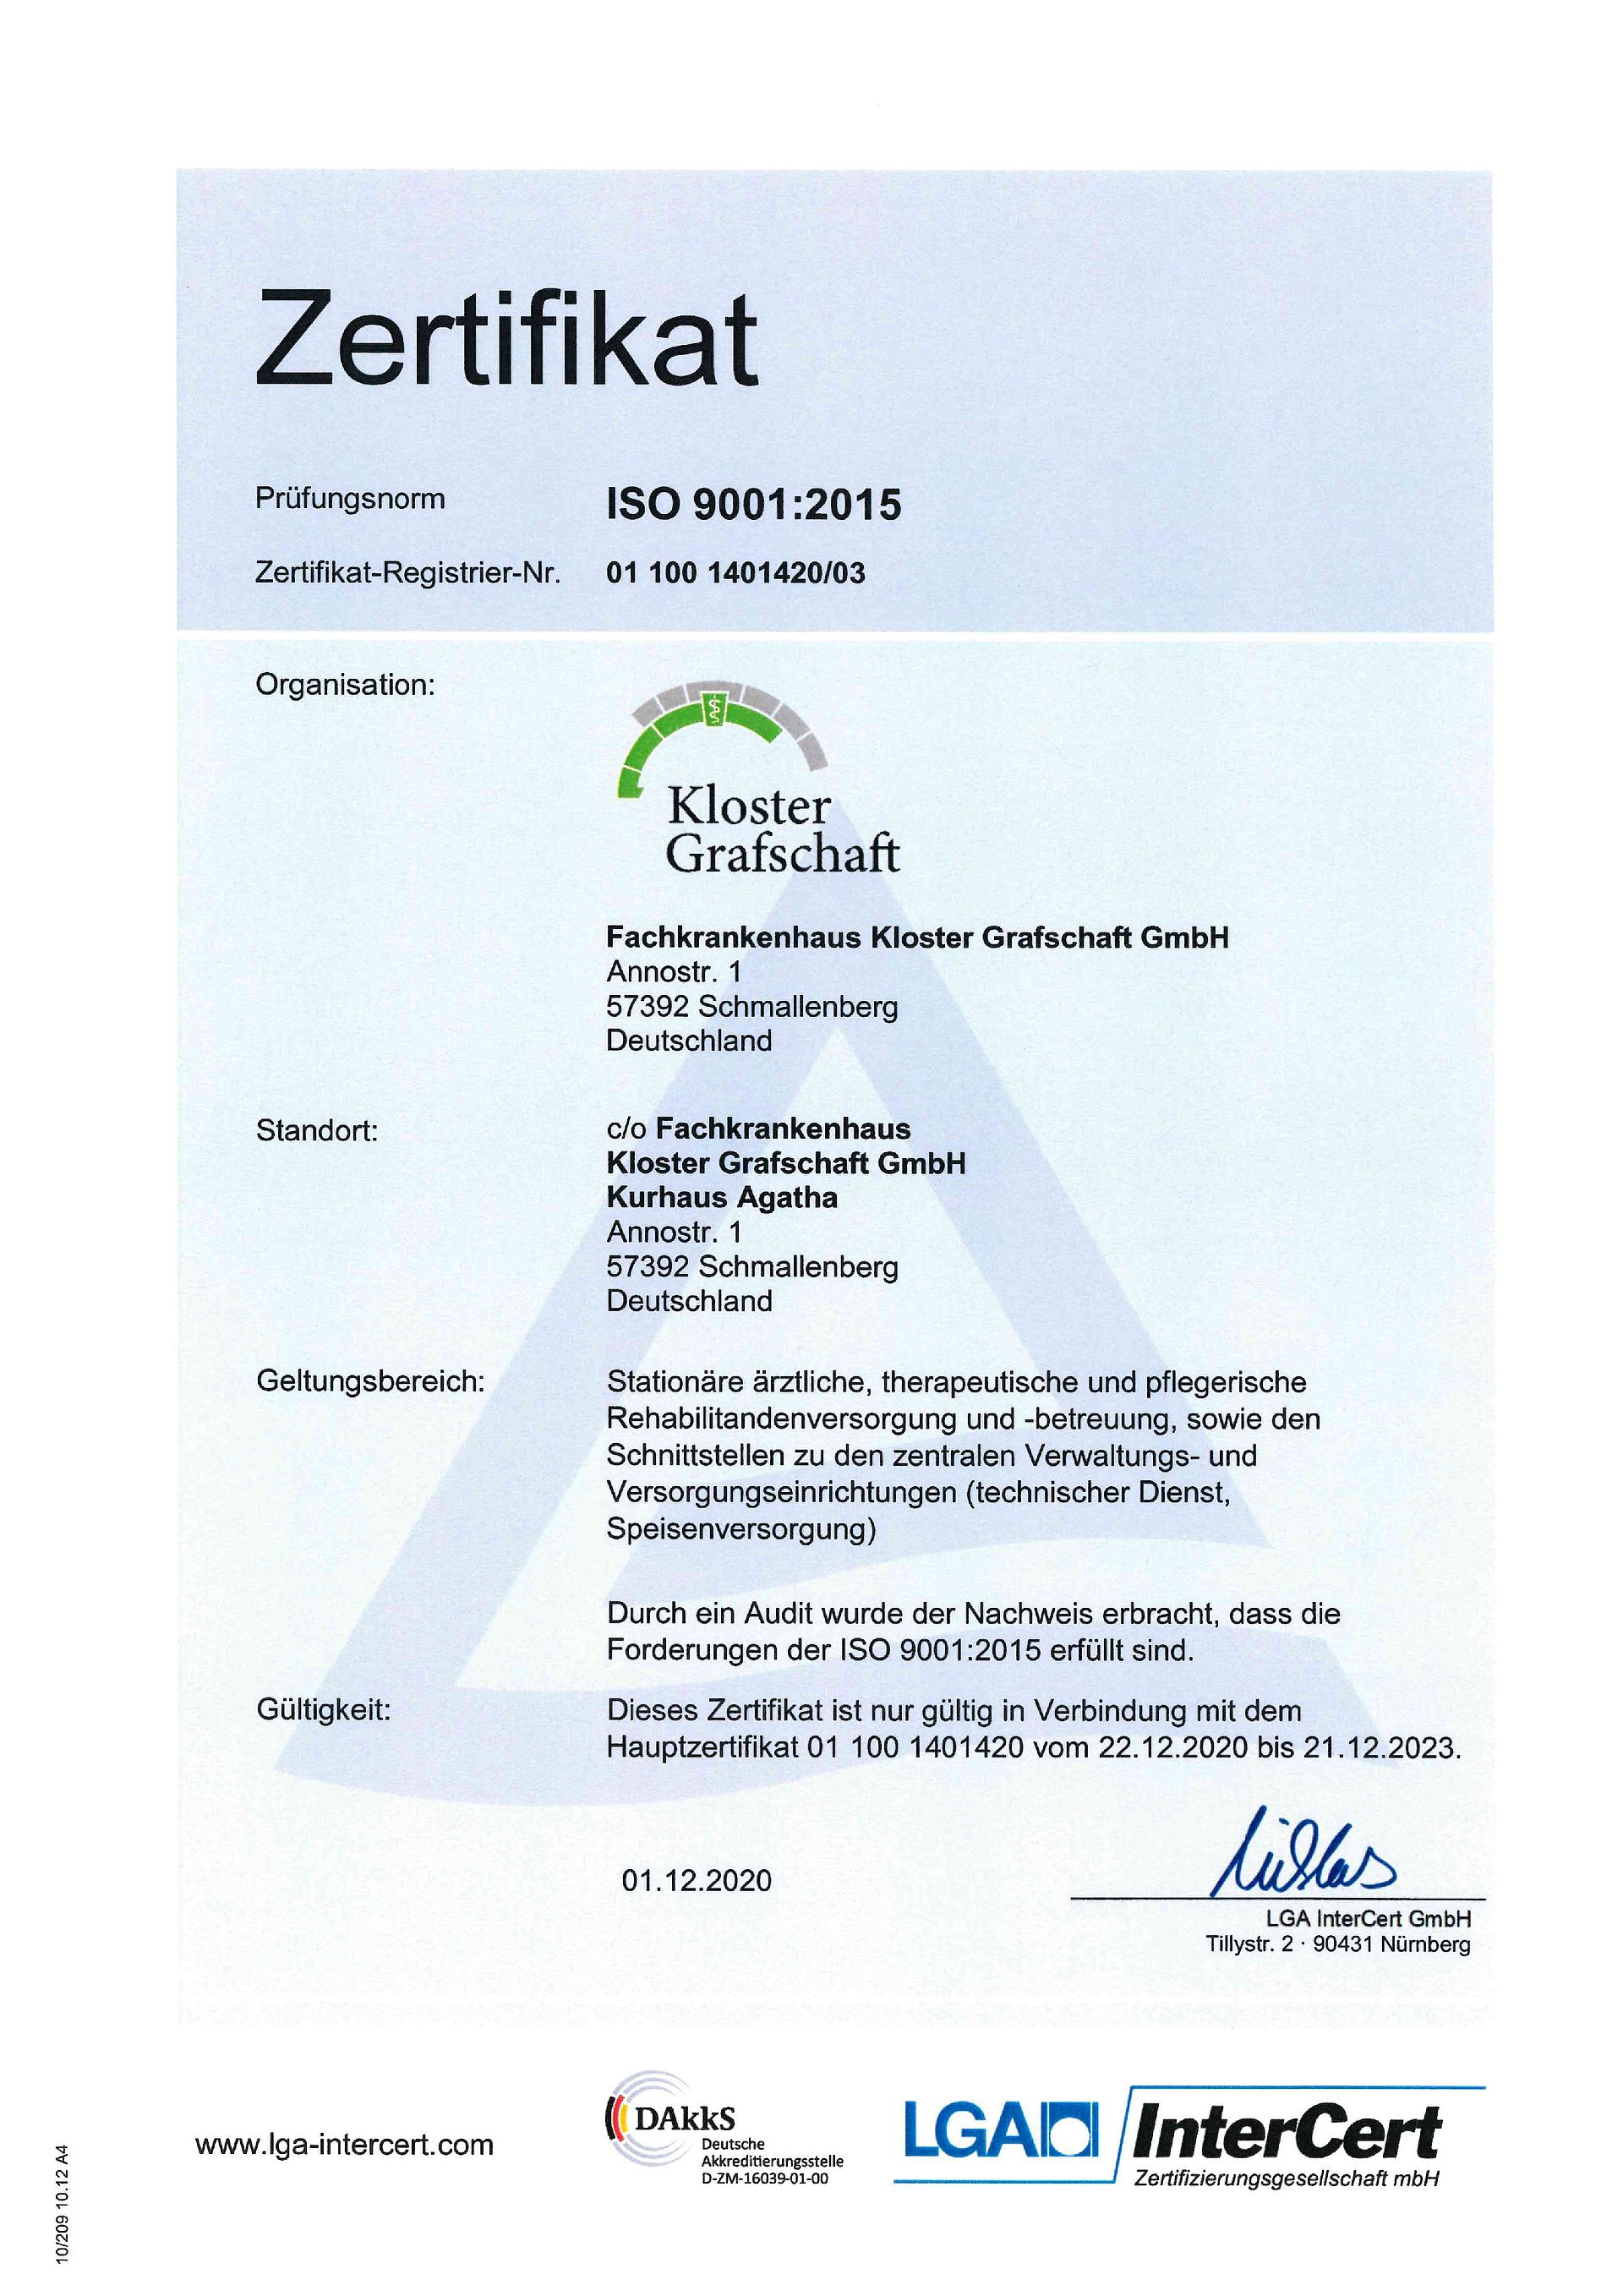 Zertifizierung DIN ISO EN 9001:2015